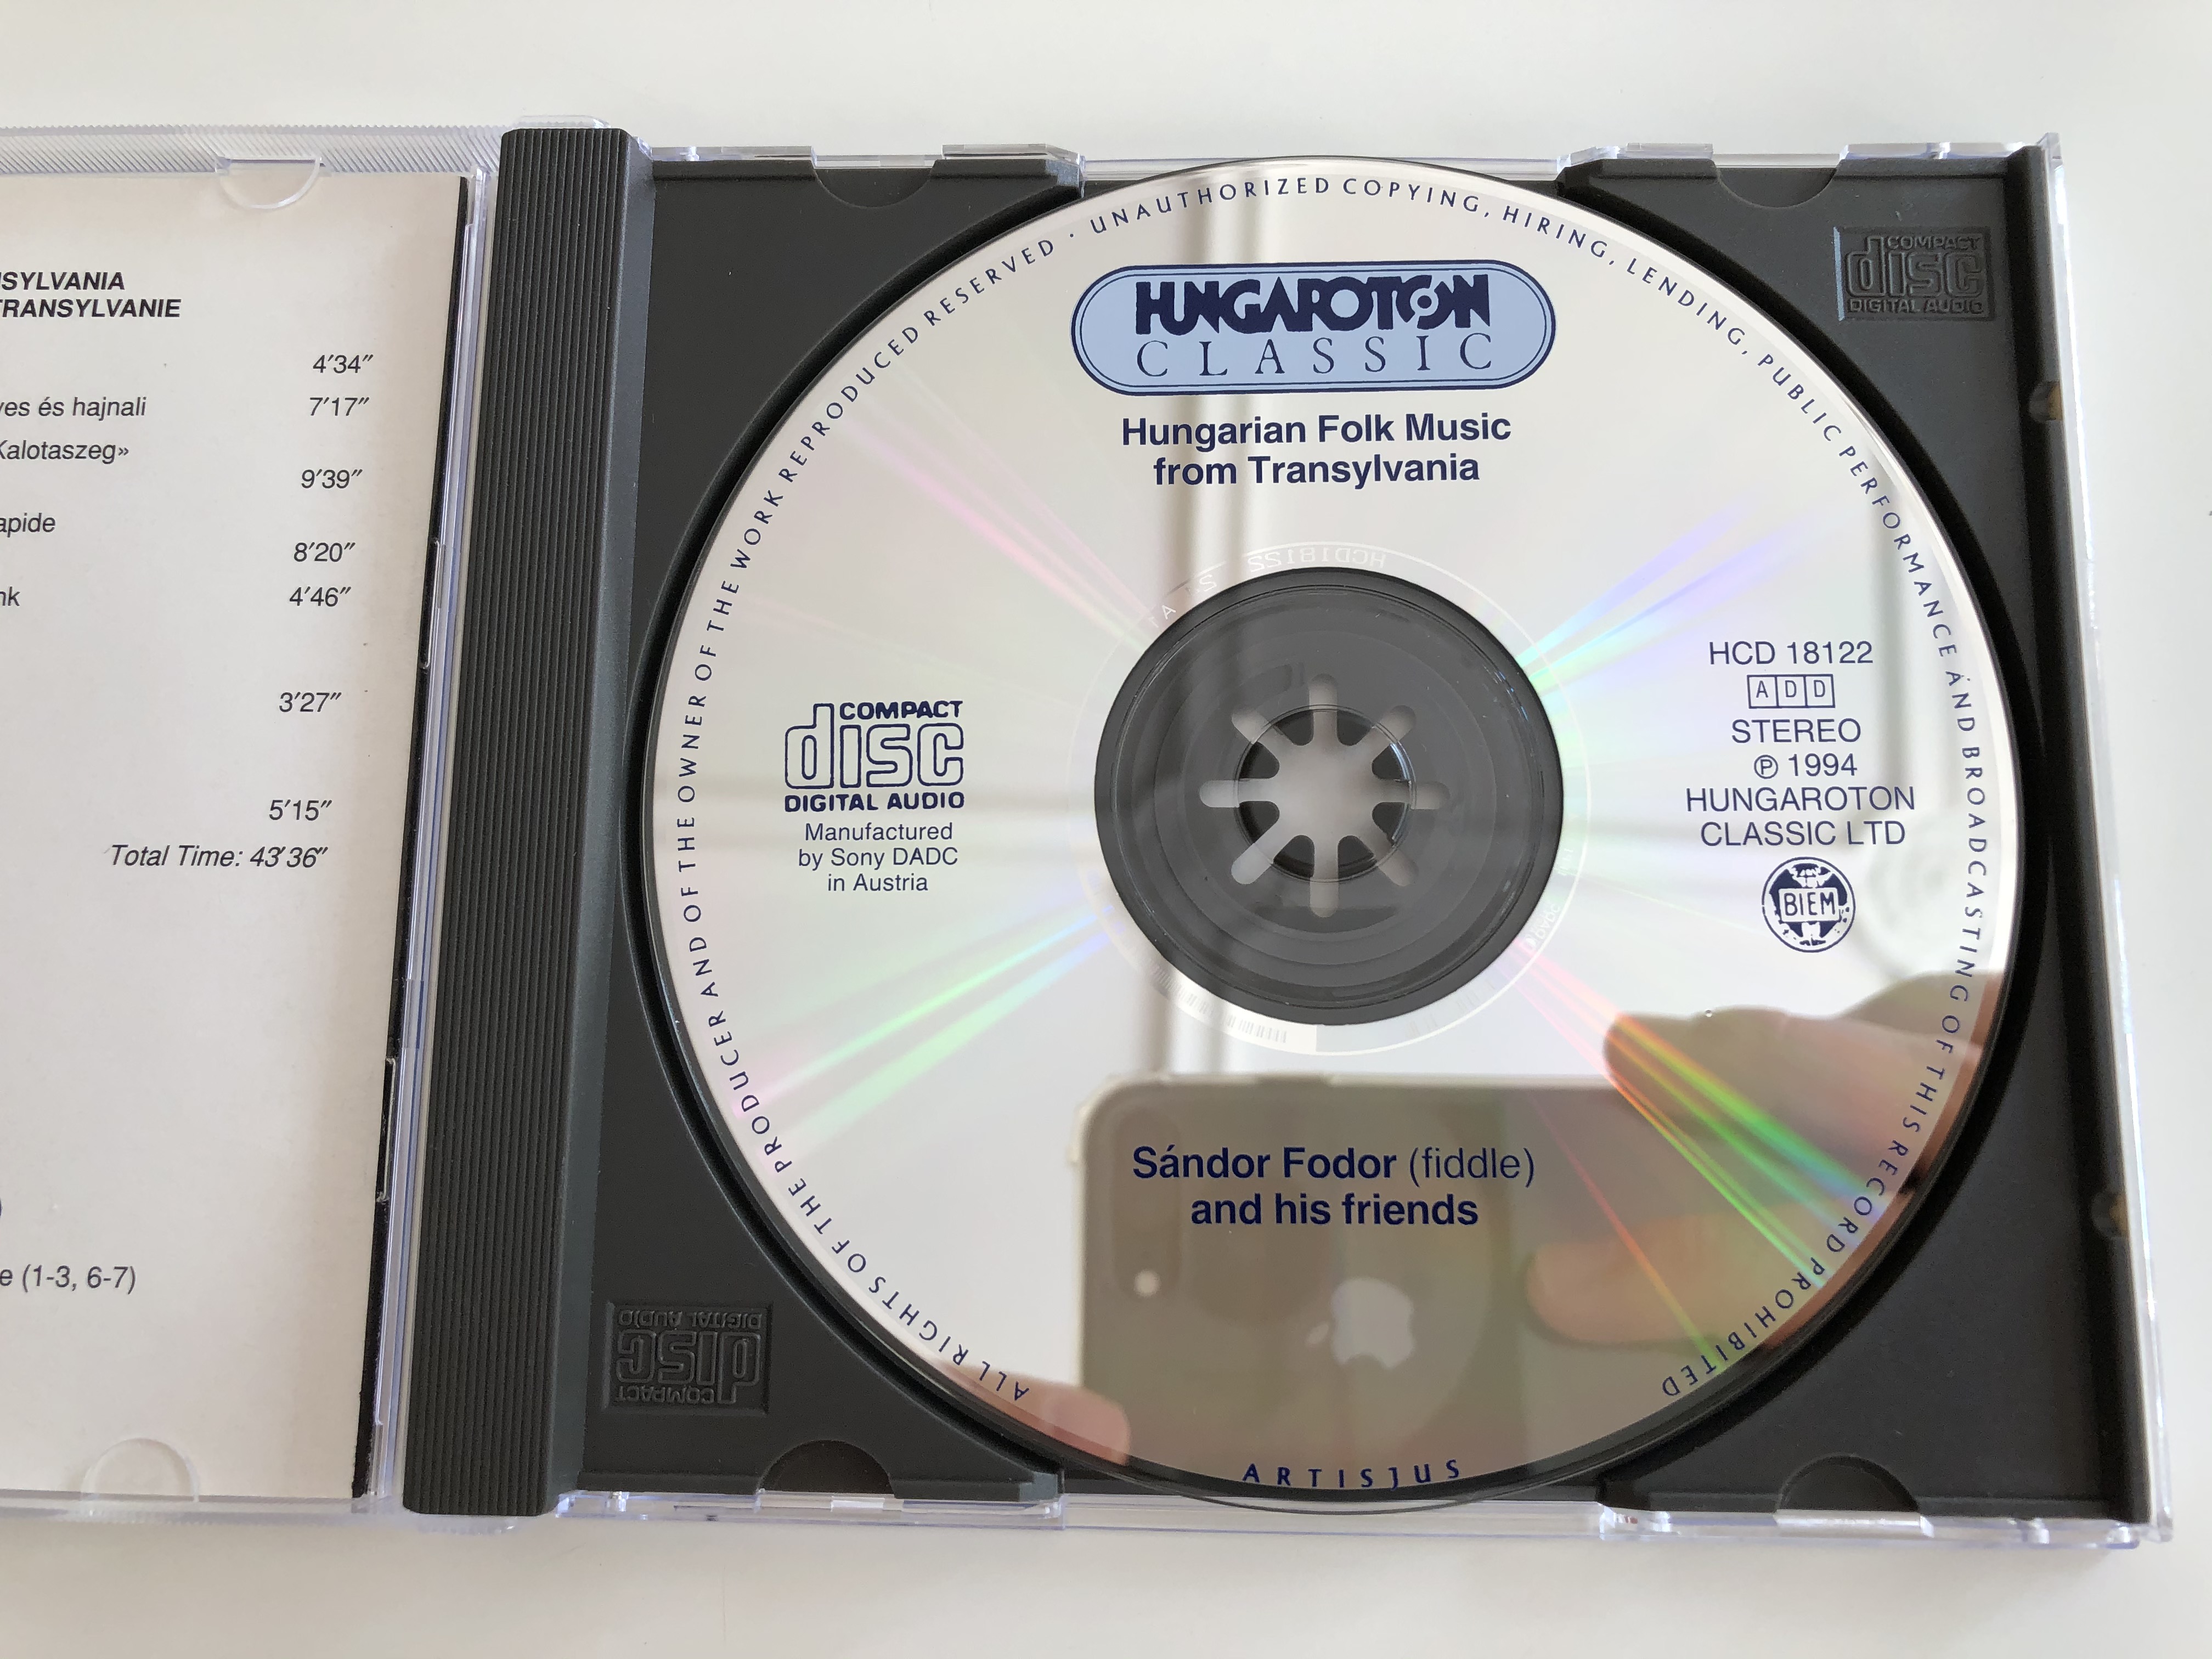 kalotaszegi-n-pzene-hungarian-folk-music-from-transylvania-s-ndor-fodor-netti-fiddleviolin-ristique-hungaroton-classic-audio-cd-1994-stereo-hcd-18122-6-.jpg